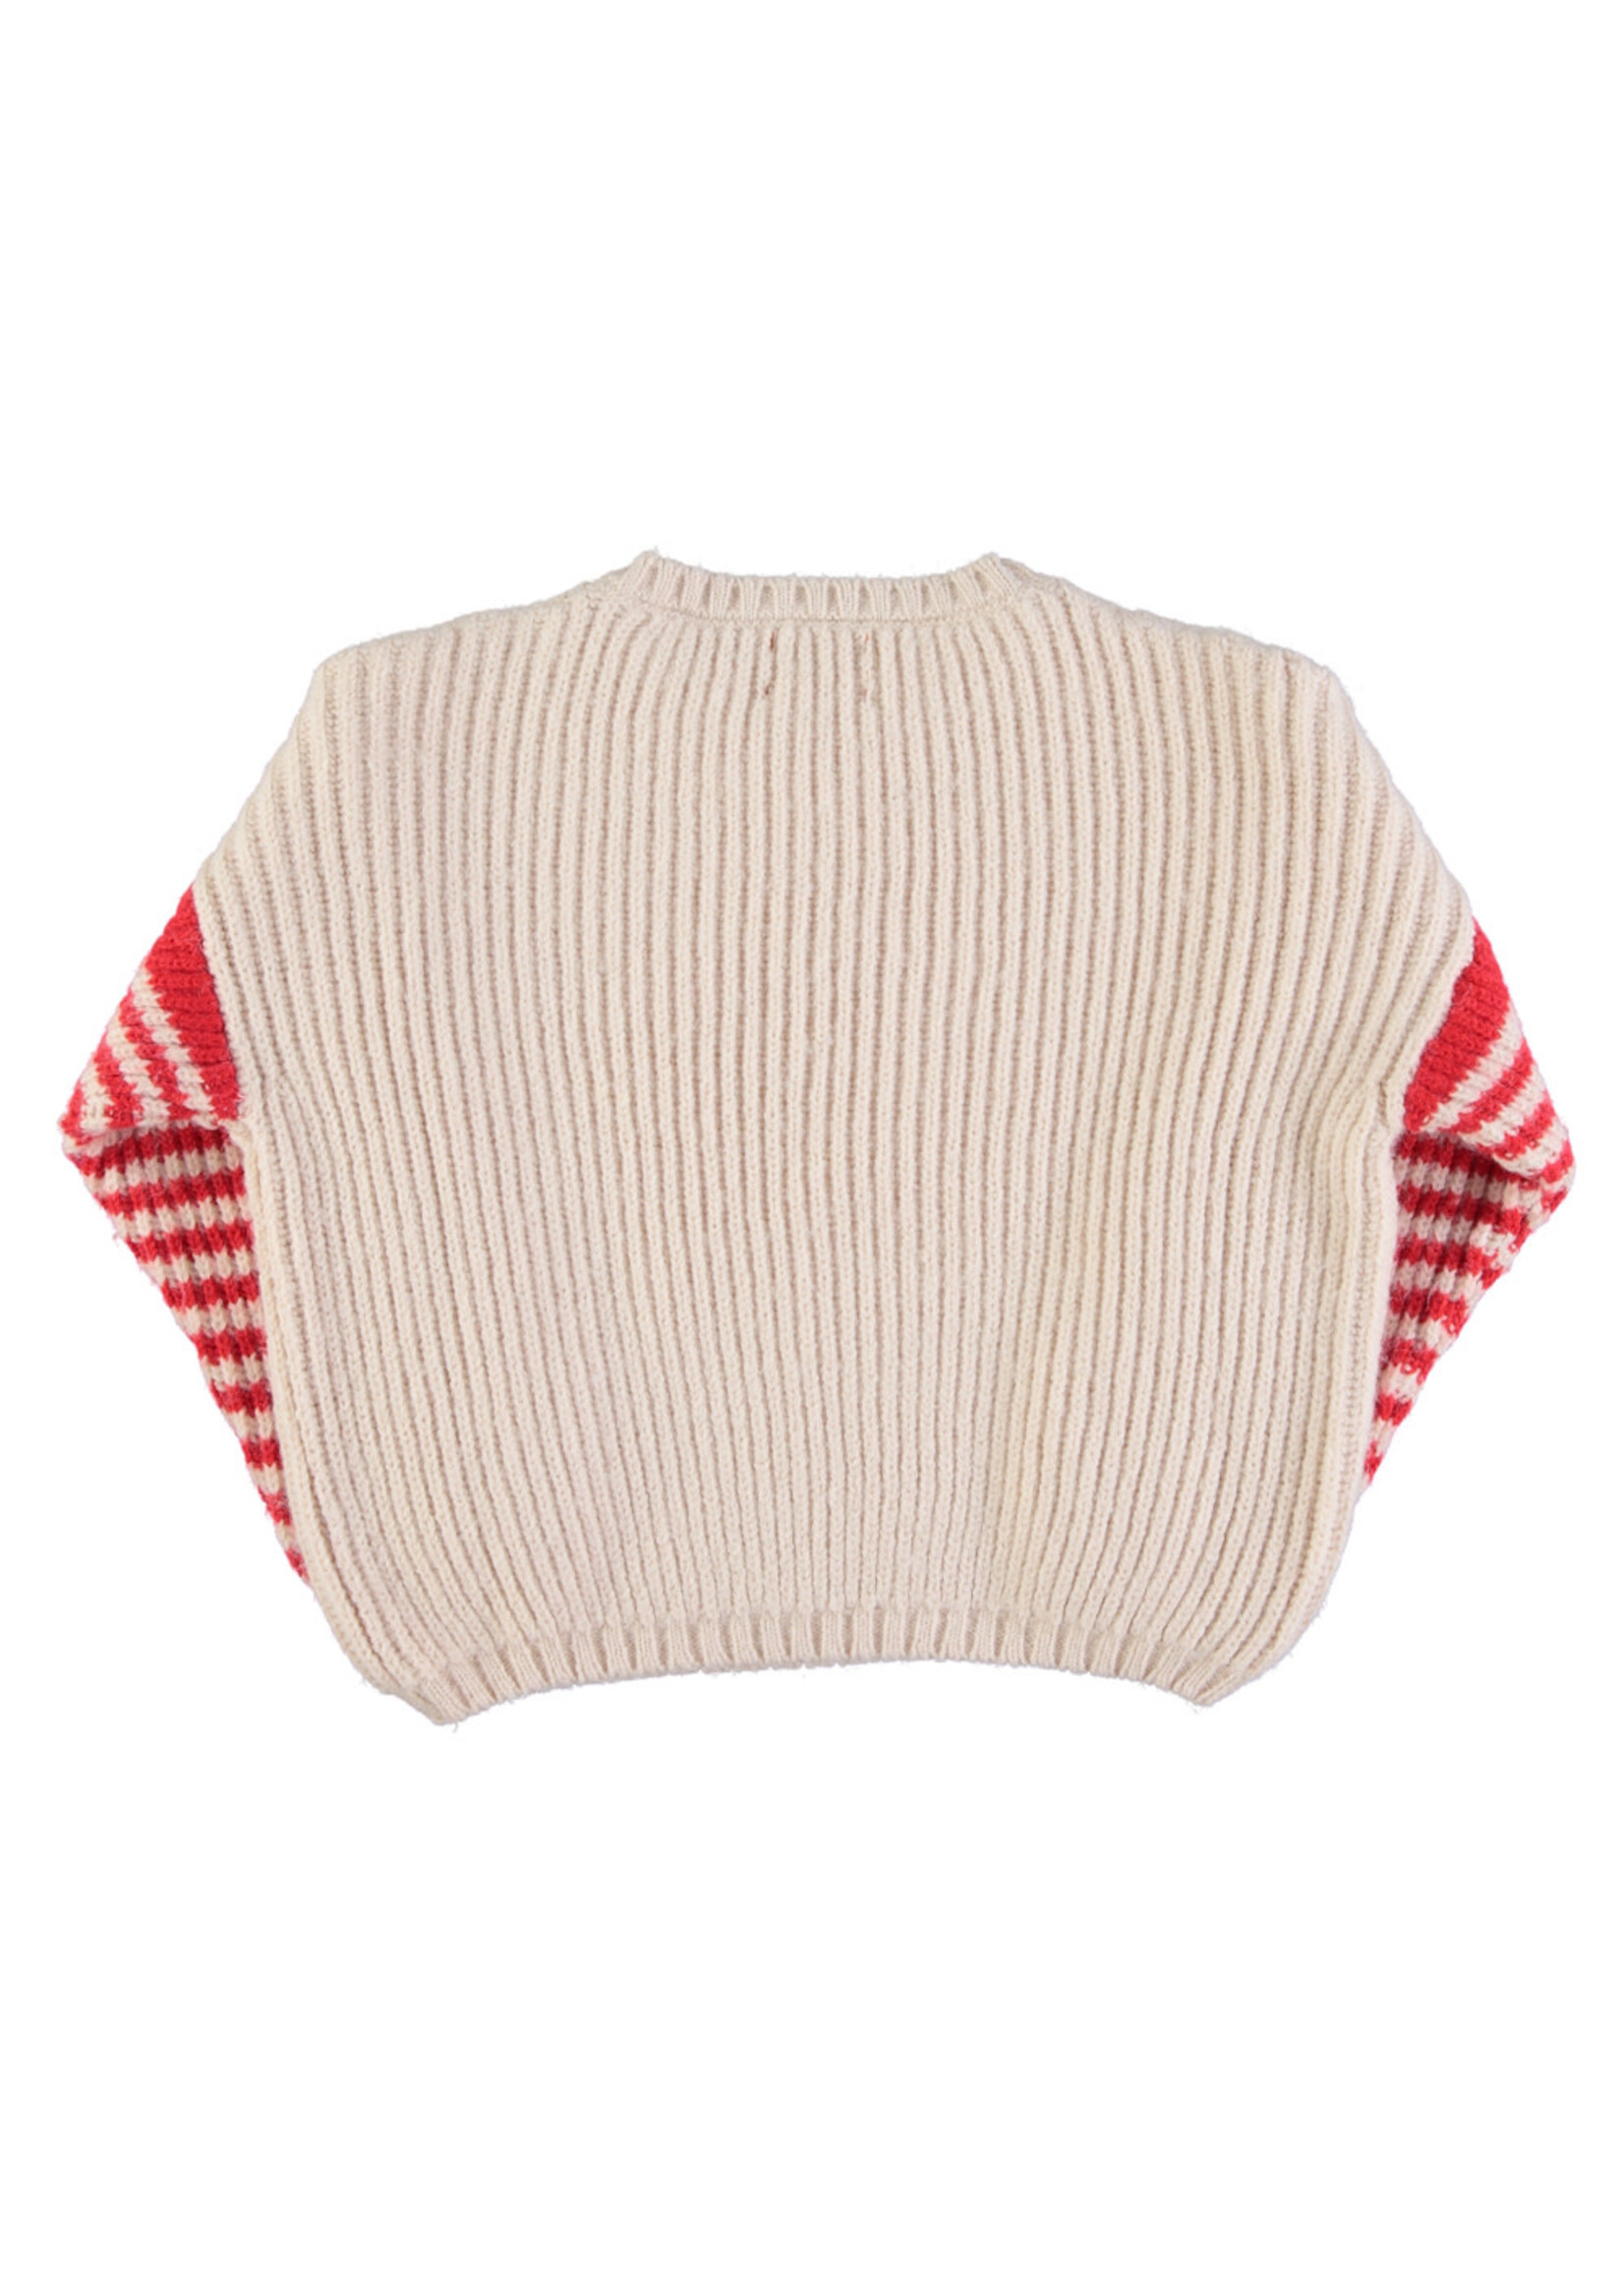 Piupiuchick Piupiuchick - Knitted sweater | Ecru & red stripes